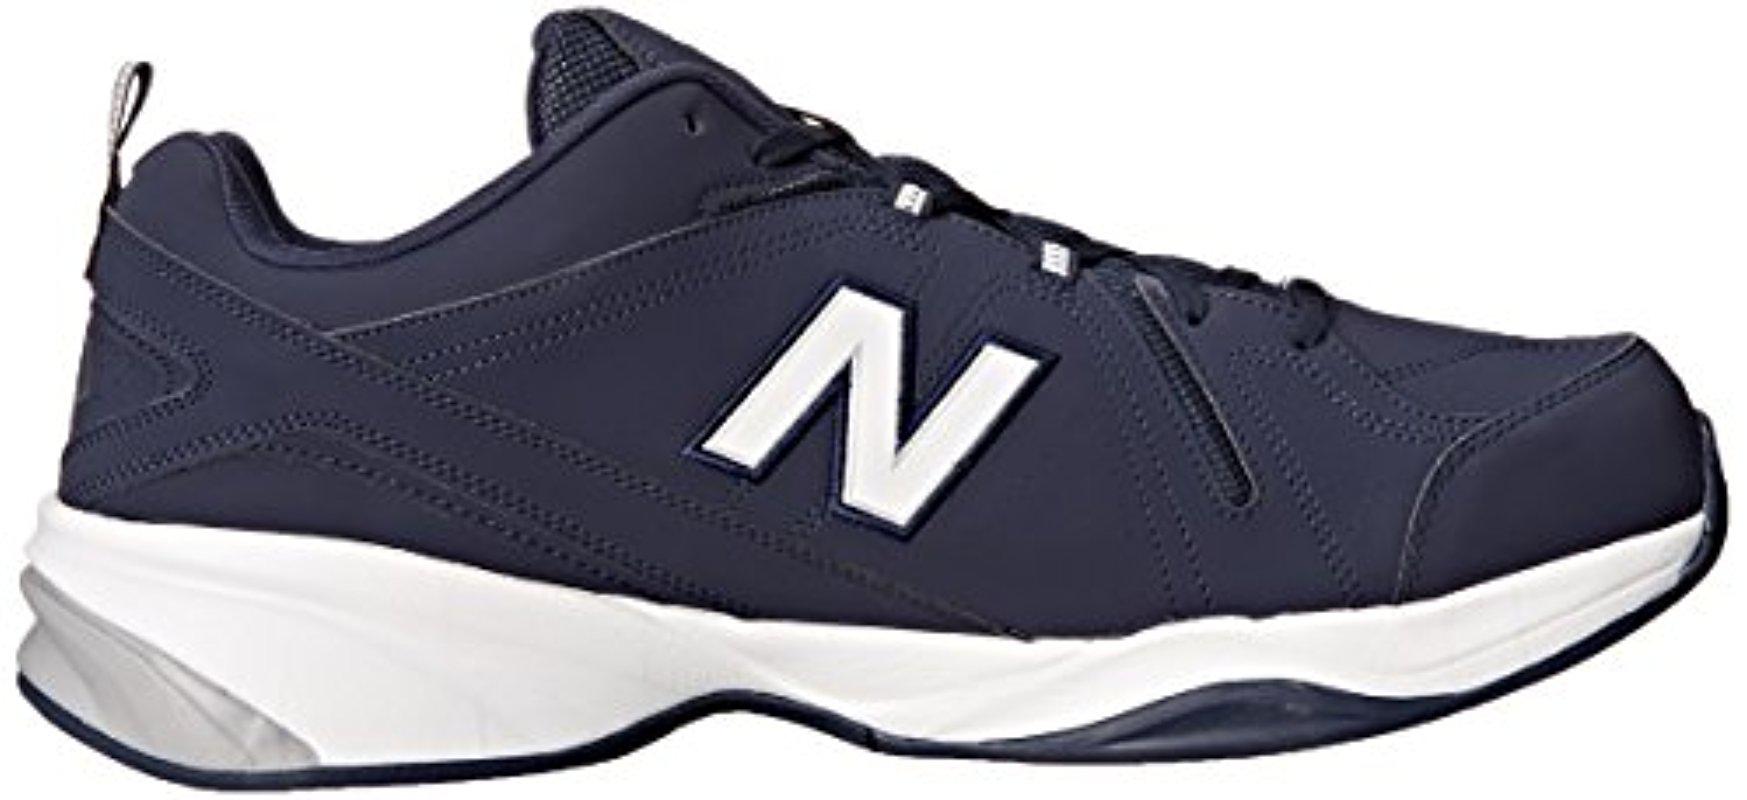 new balance mx608v4 walking shoes